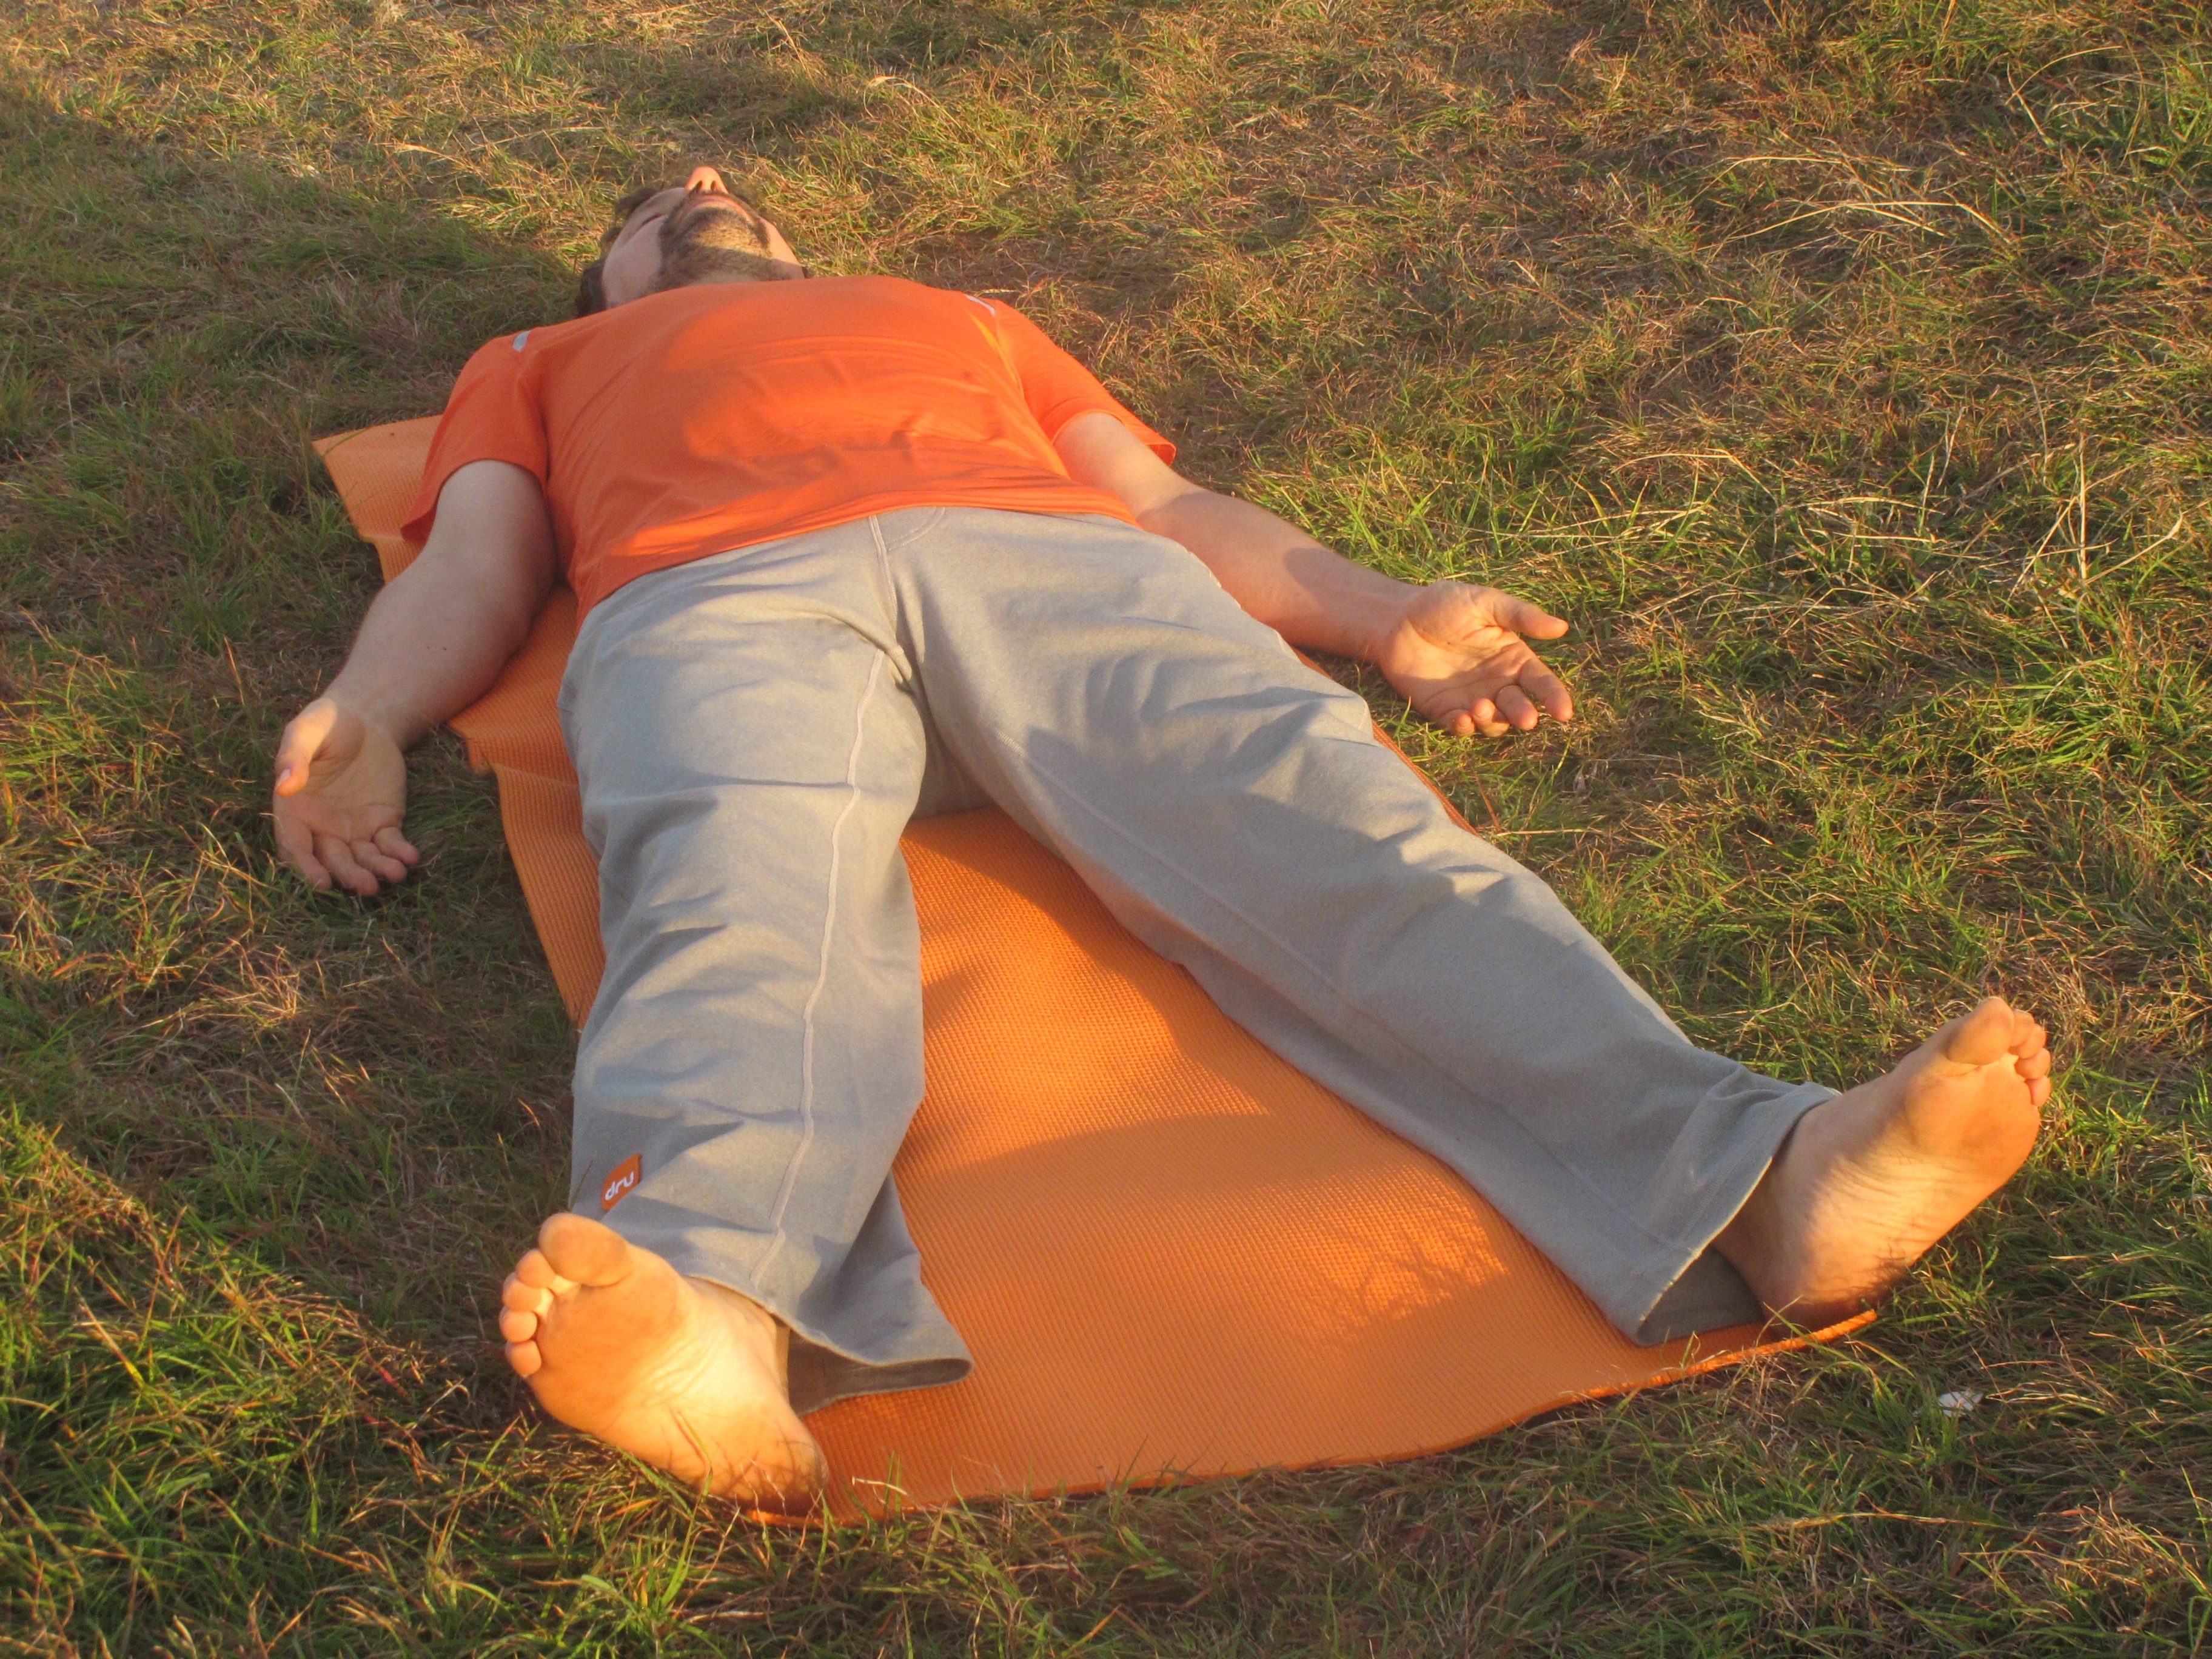 Man enjoying a stress-relieving Dru relaxation